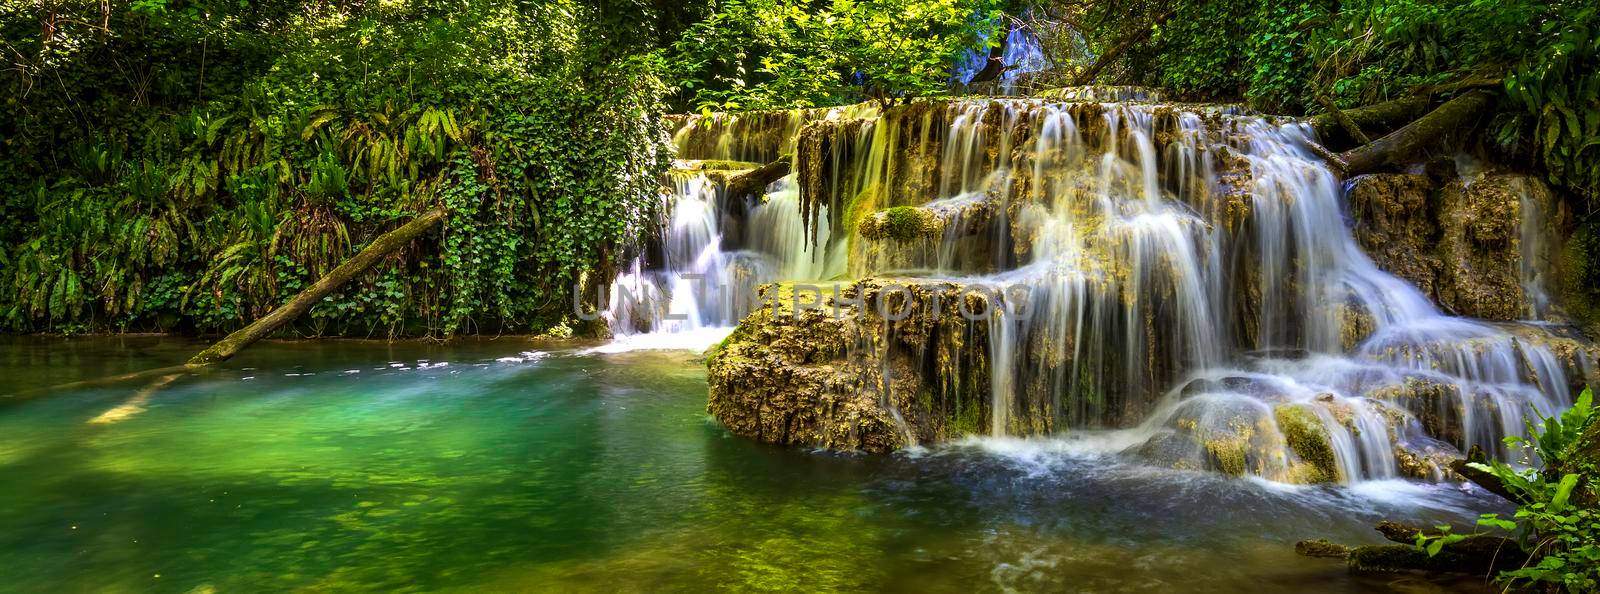 Cascade waterfalls paniramic view. Krushuna falls in Bulgaria near the village of Krushuna, Letnitsa.